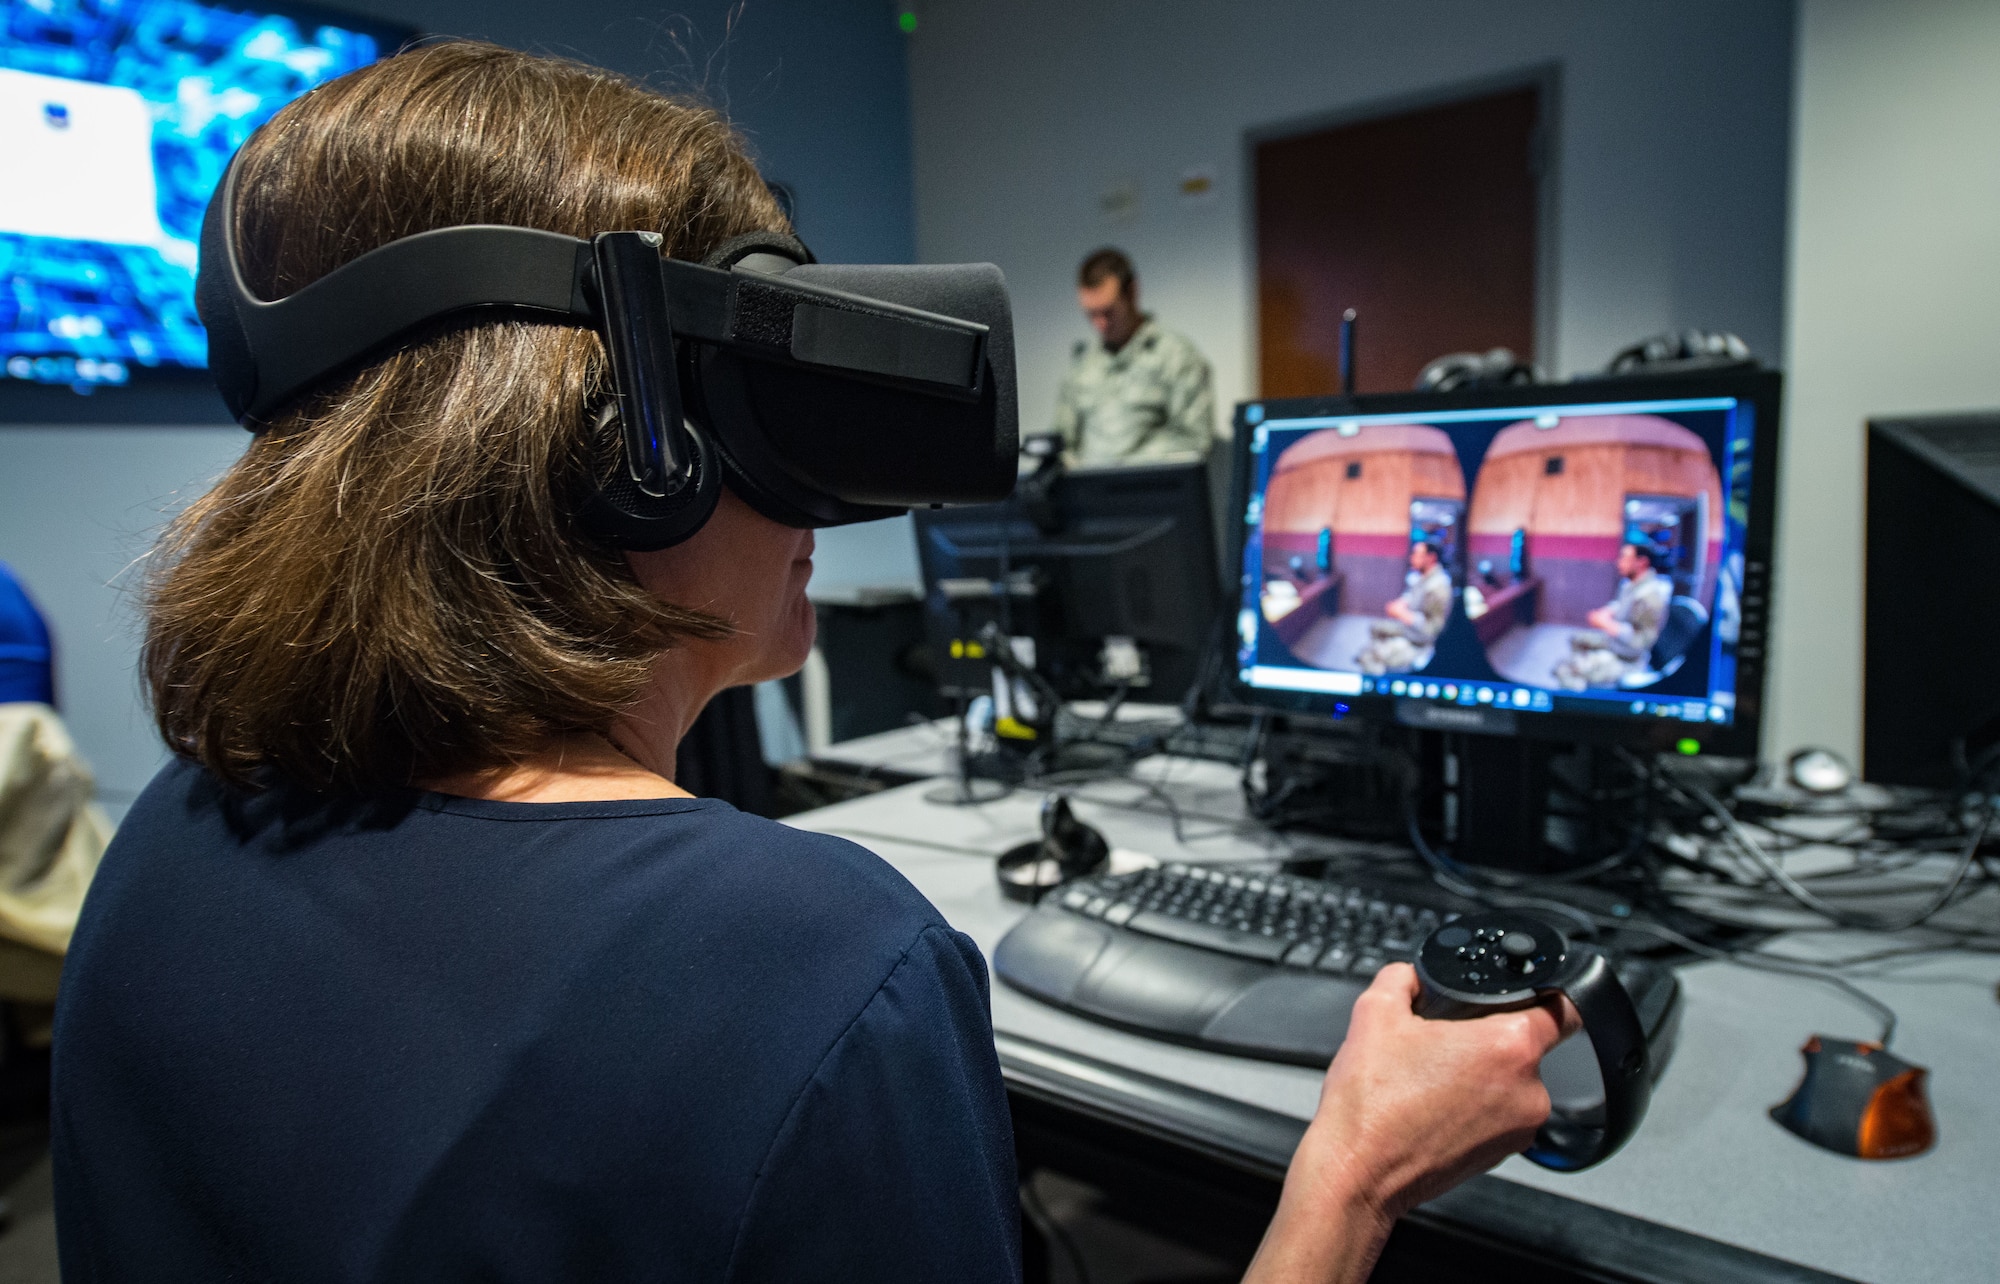 NSF attendee using virtual reality program